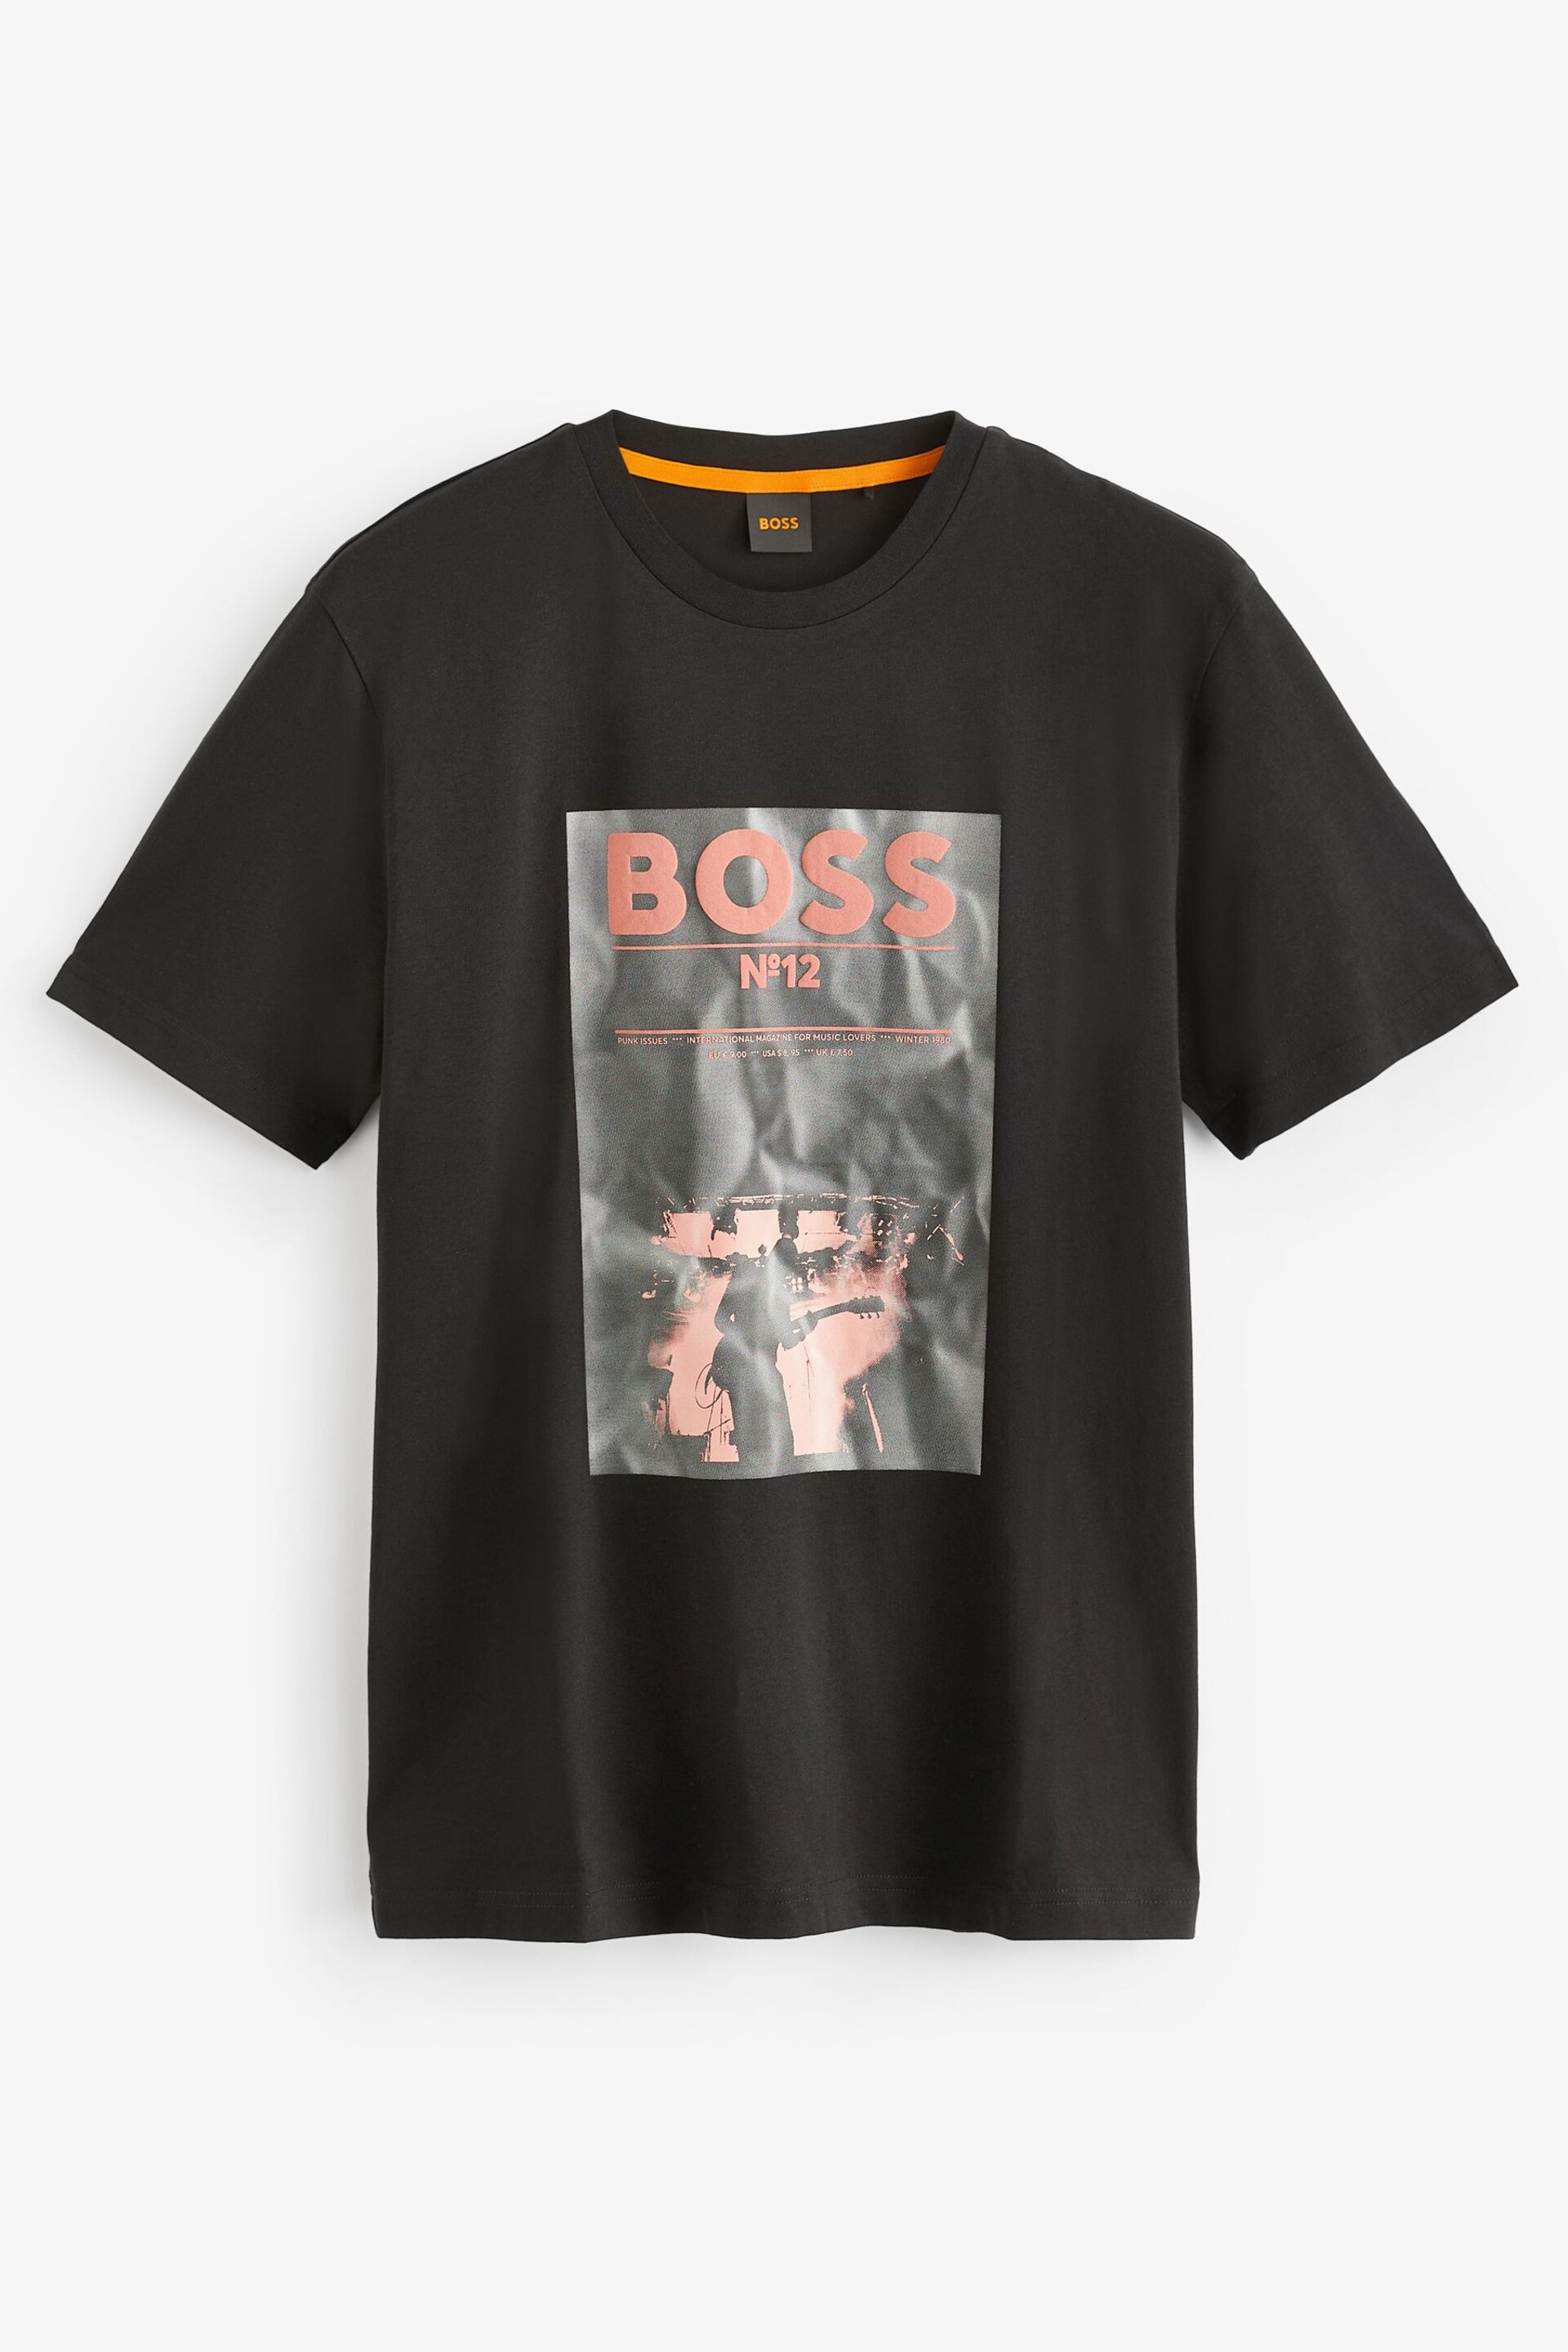 BOSS Black Music Graphic Print T-Shirt - Image 5 of 5